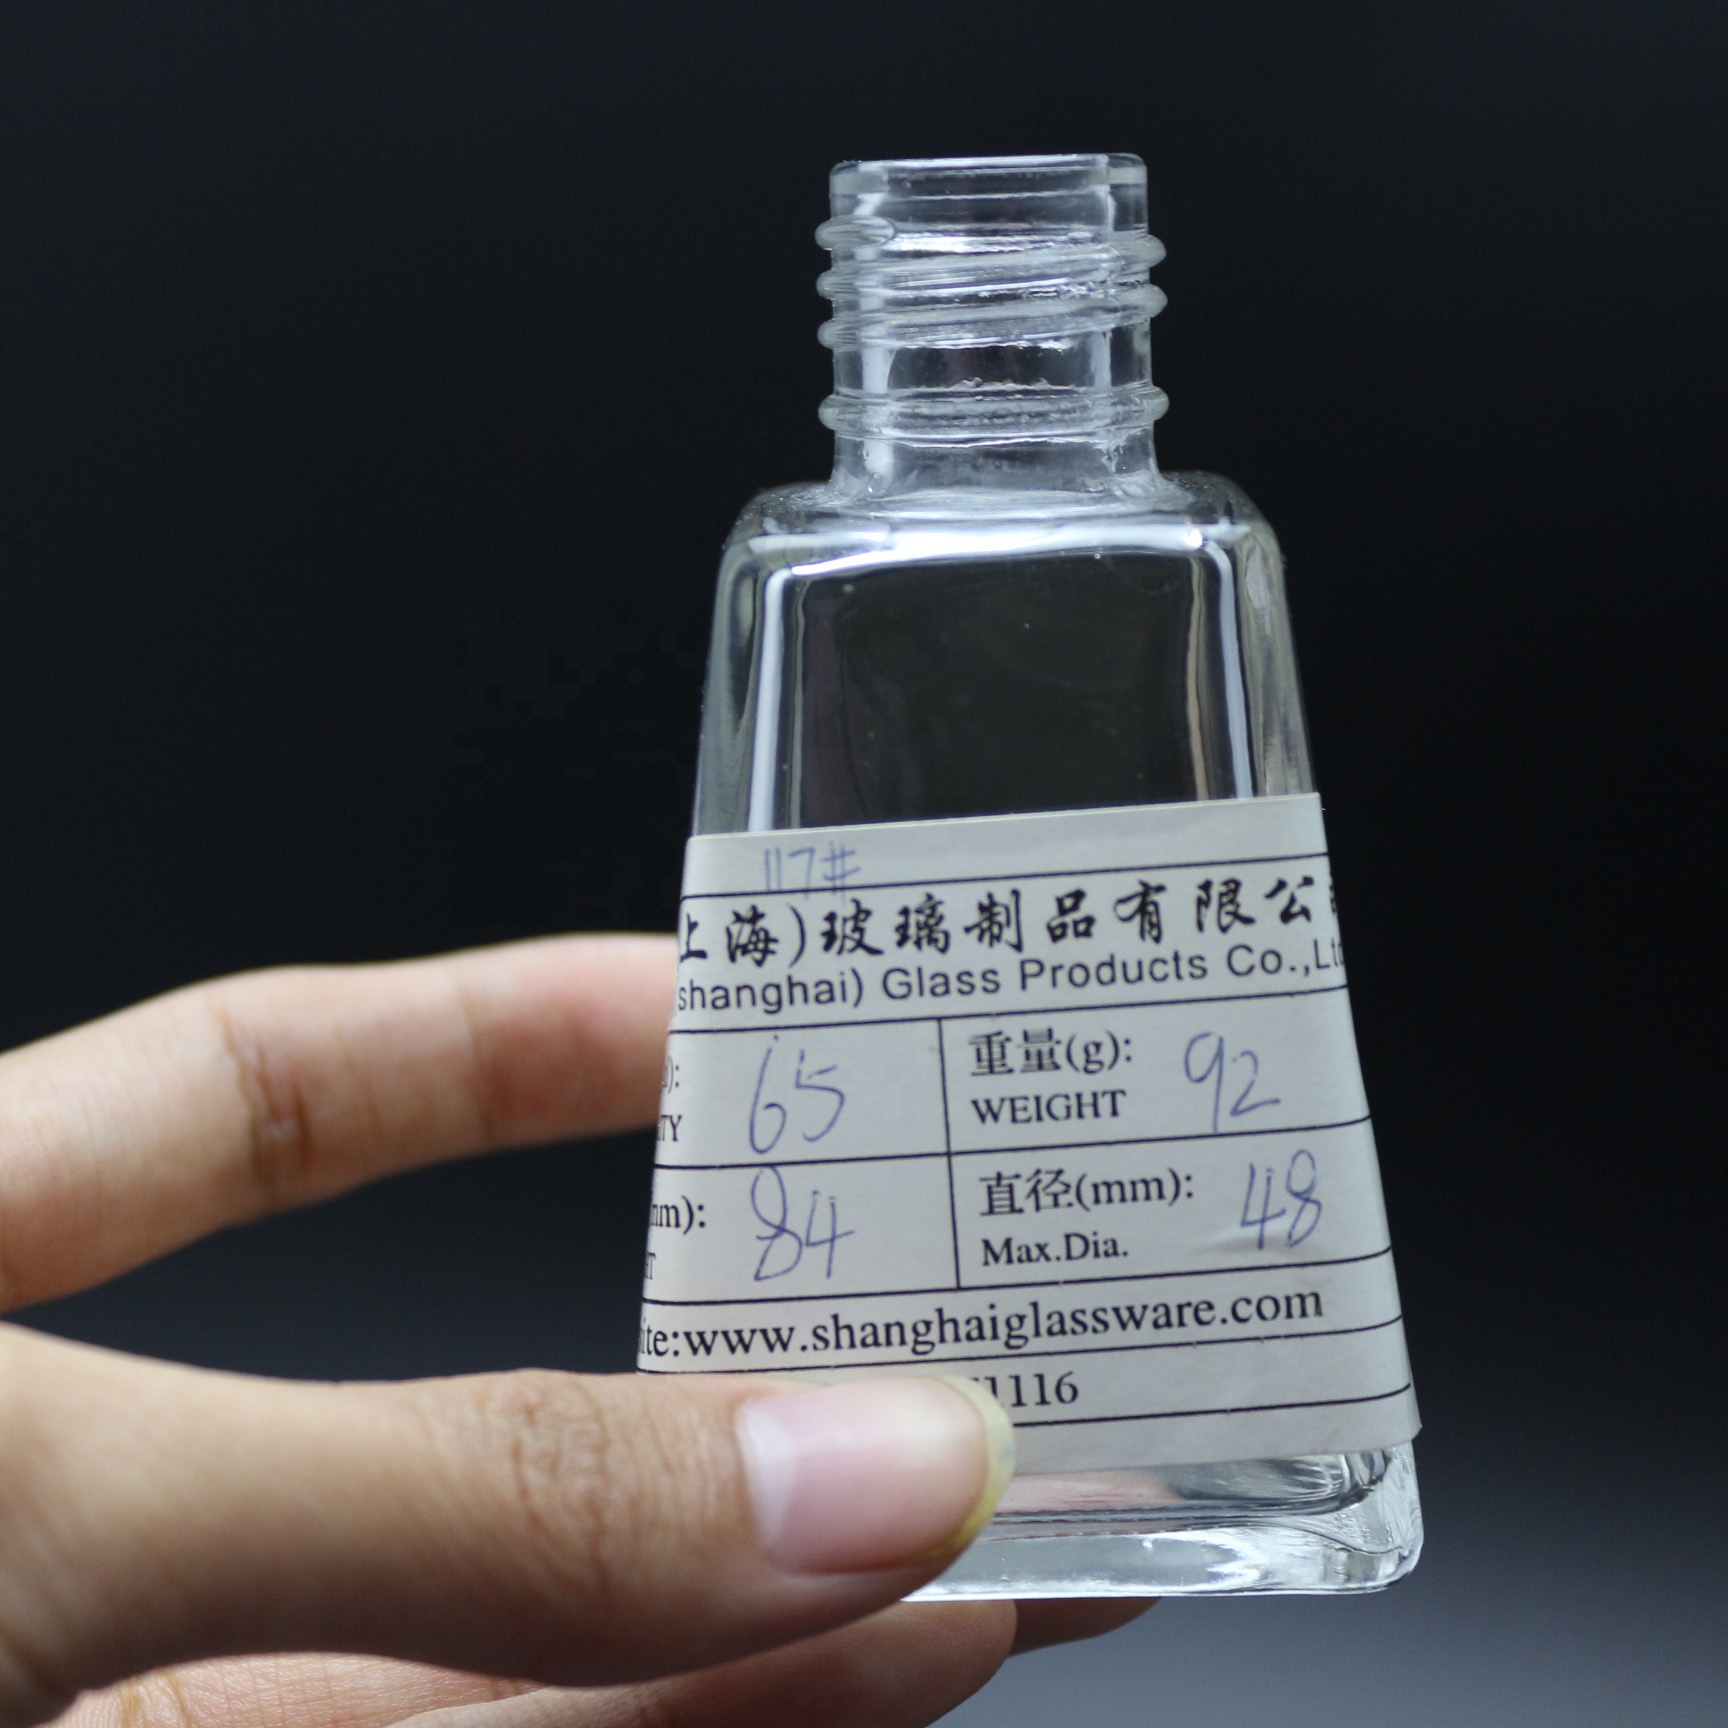 Fragrance reed oalje diffuser piramide decorative Glass Bottle 200ml diffuser Glass Bottle piramide